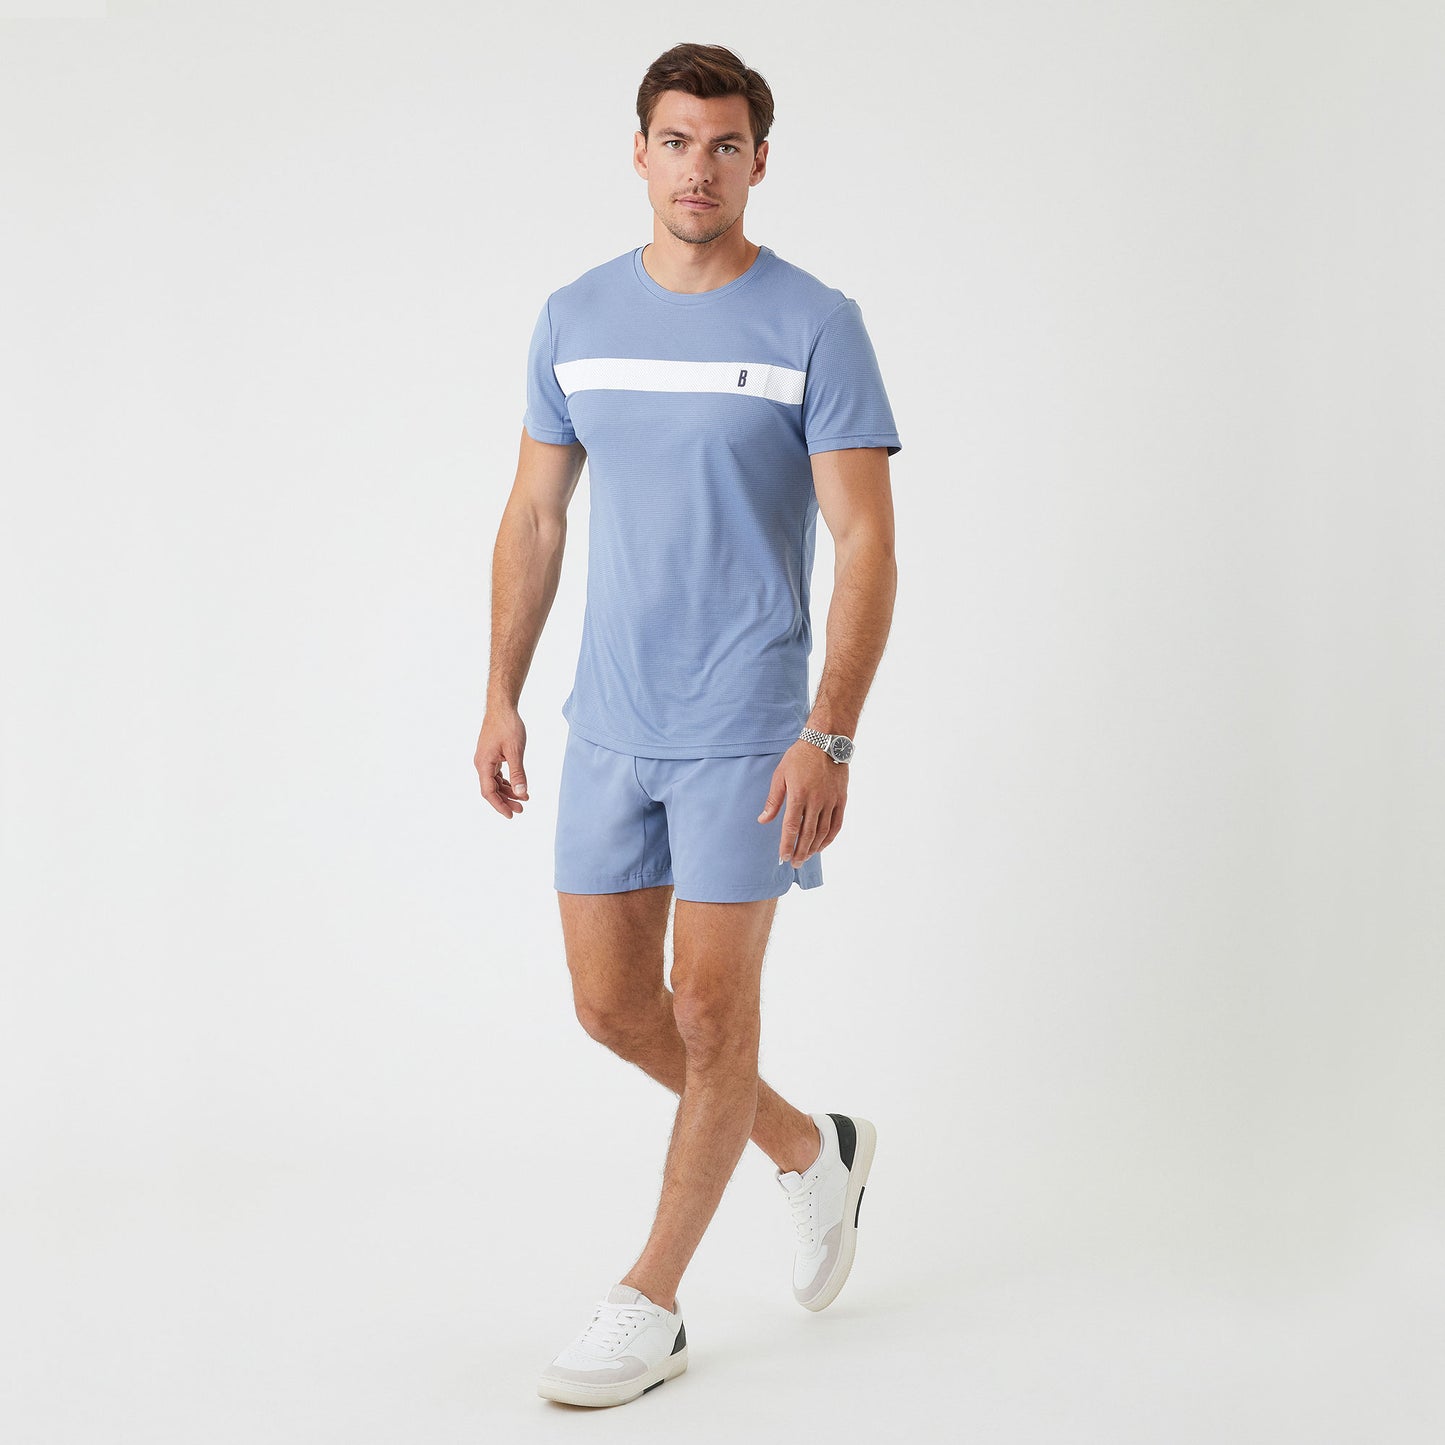 Björn Borg Ace Men's Light Tennis Shirt Blue (3)